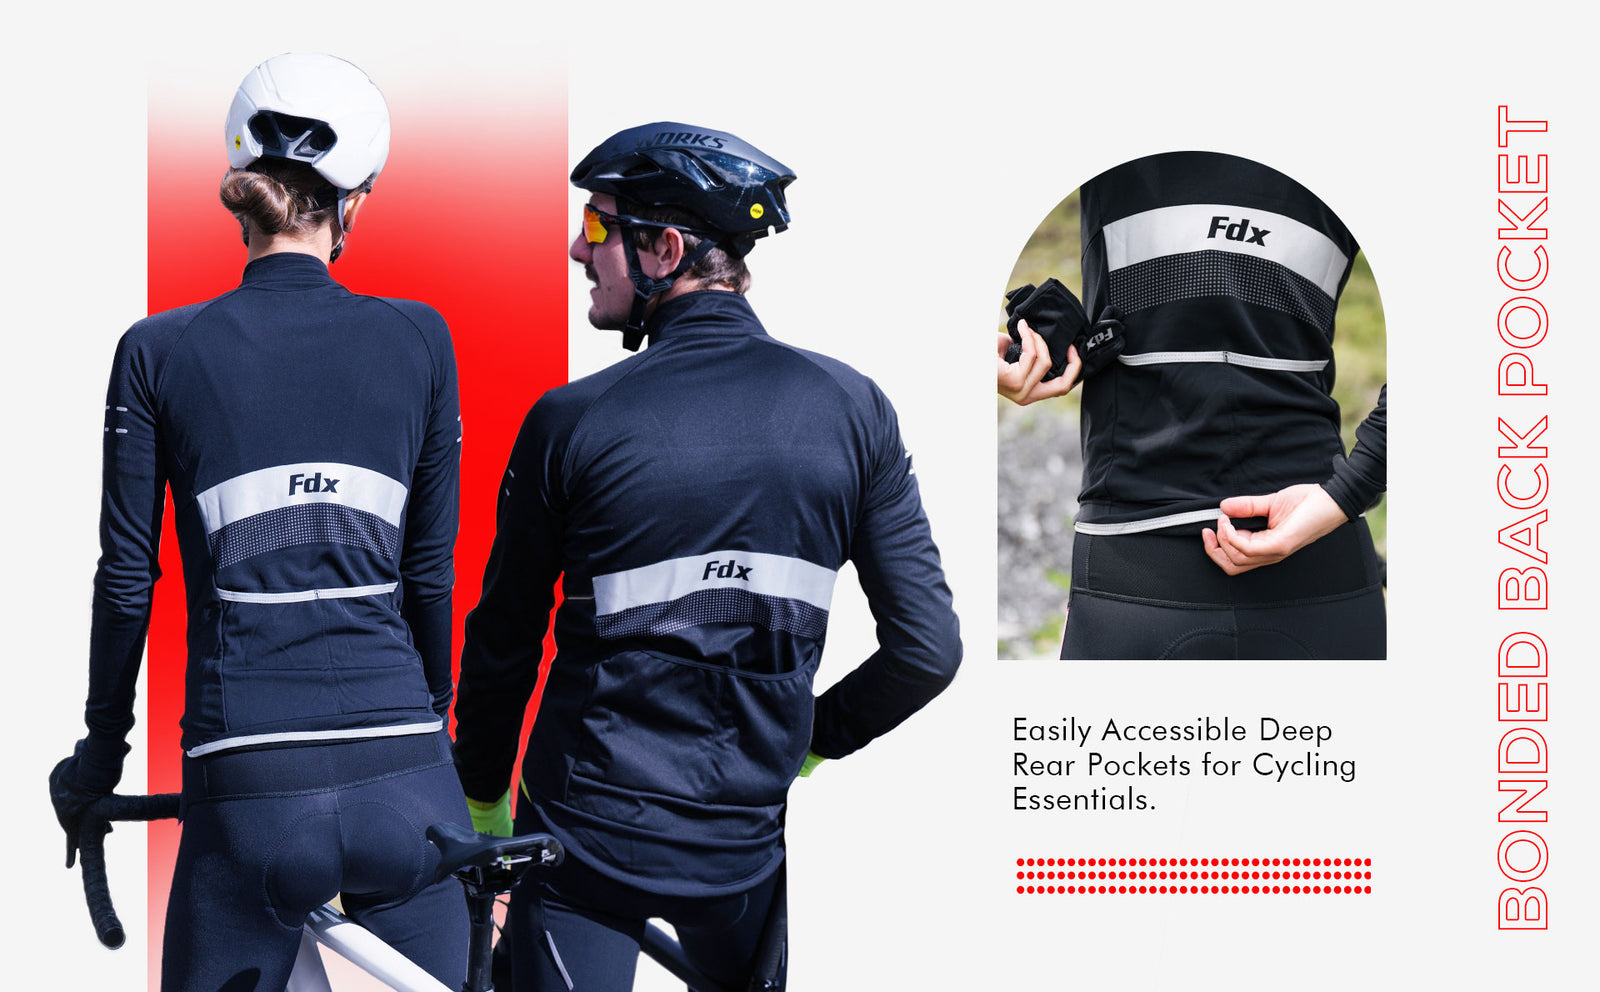 Fdx Black & Yellow Thermal Long Sleeve Jersey Bib Tights Windproof Water-Resistant Hi Viz Reflector & Pocket Winter Men Women Cycling Gear AU